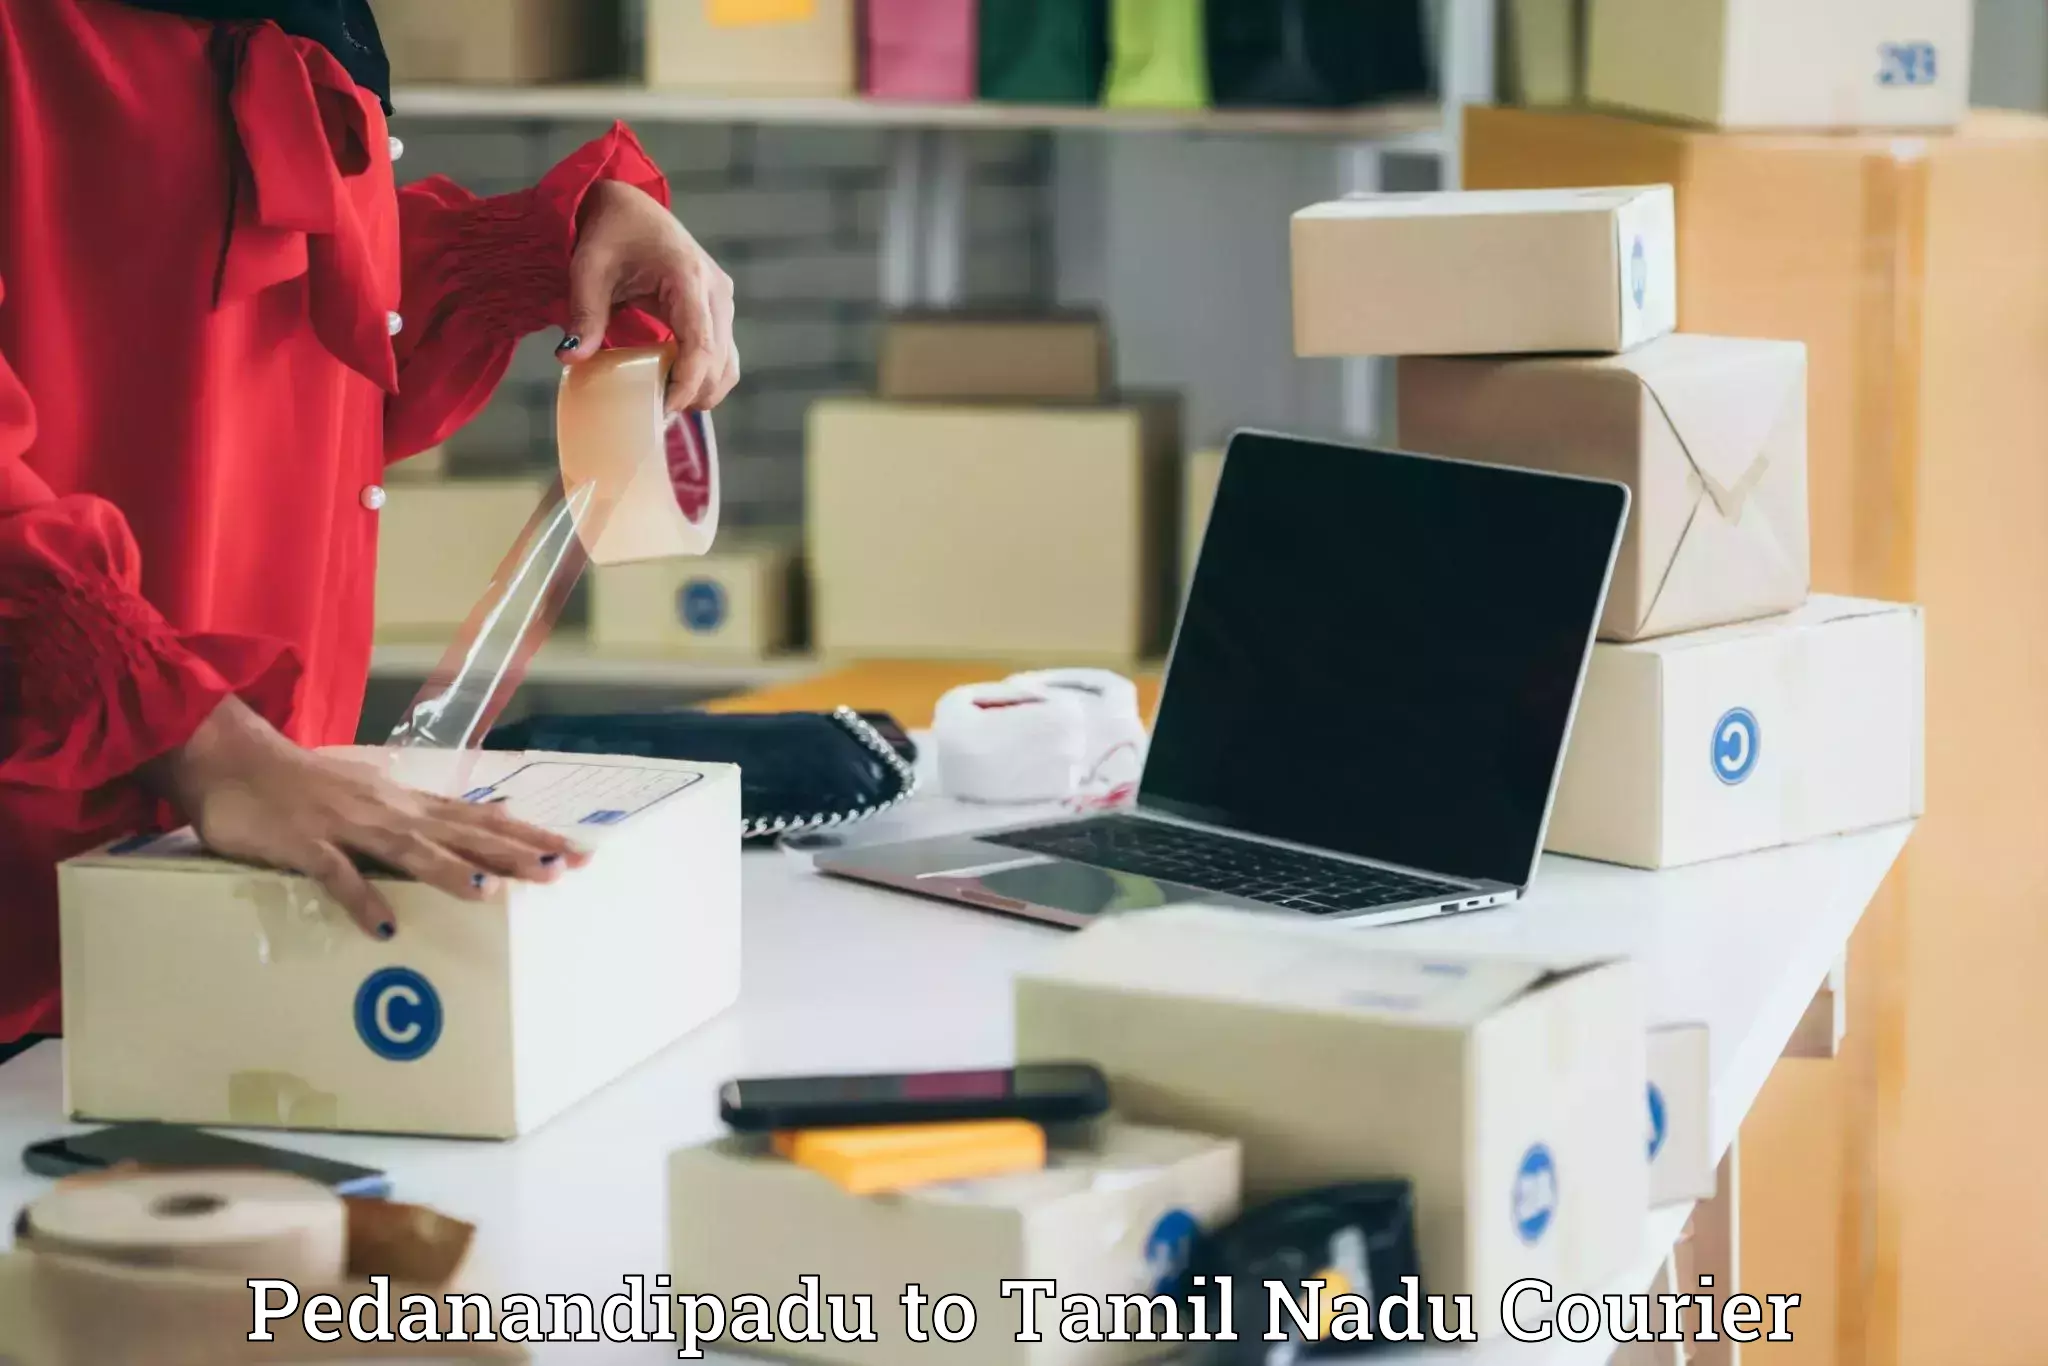 Dynamic courier operations Pedanandipadu to Tamil Nadu